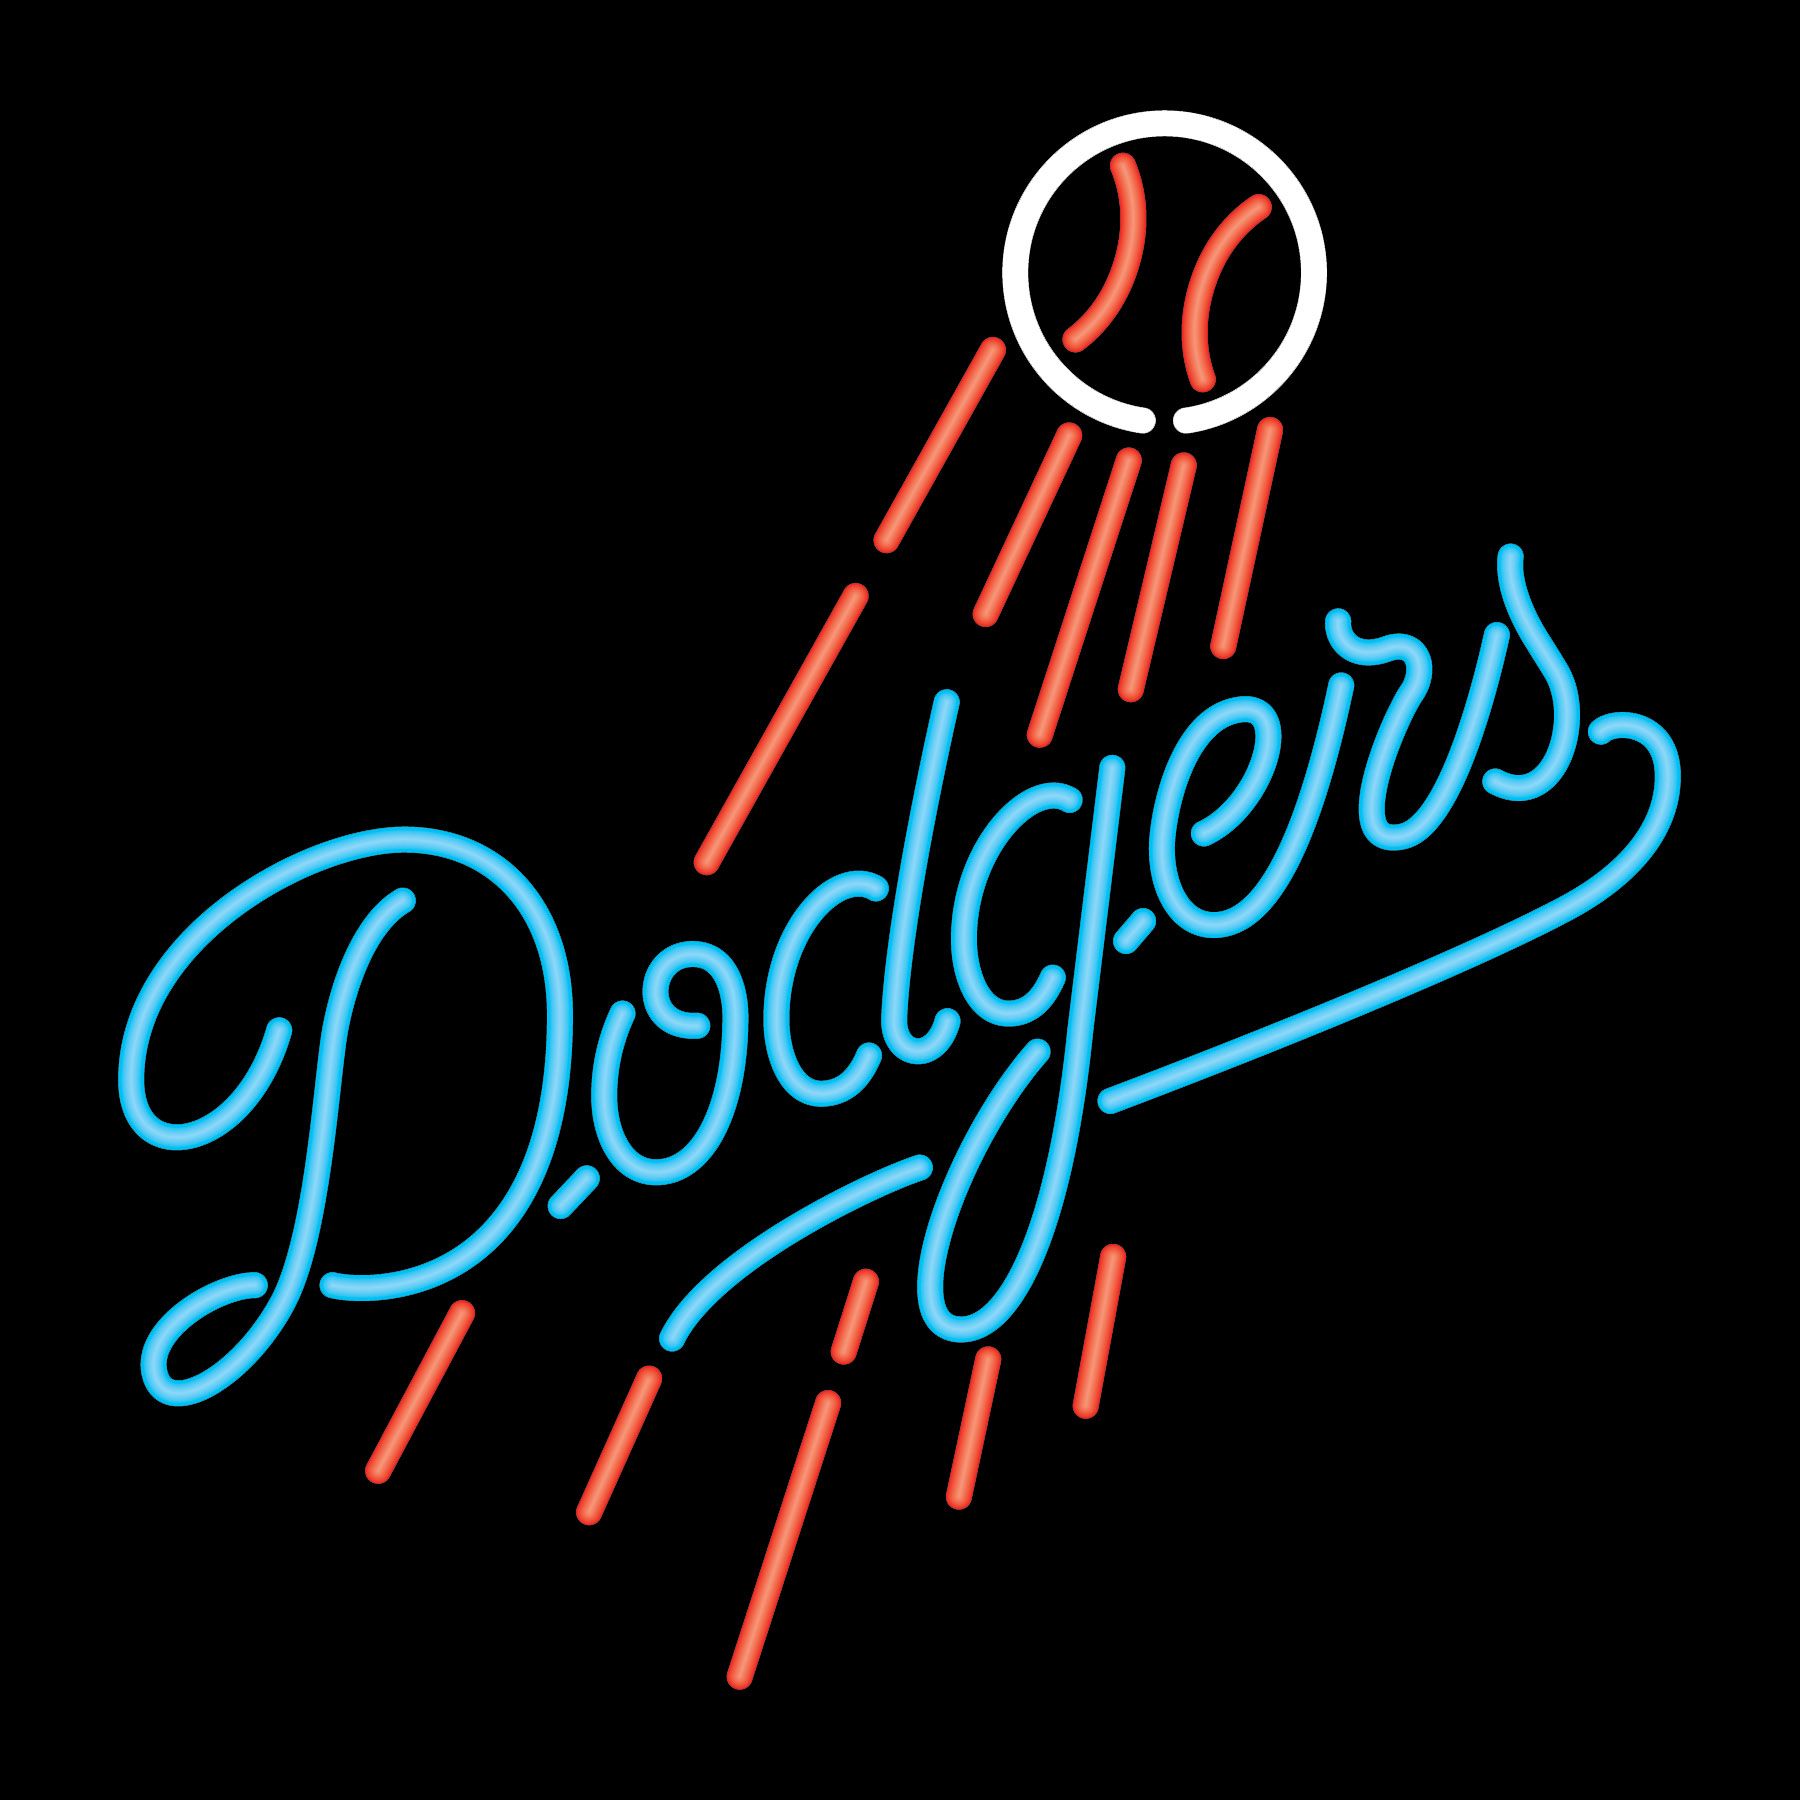 Los Angeles Dodgers Wallpaper Widescreen 432yj1m 4usky